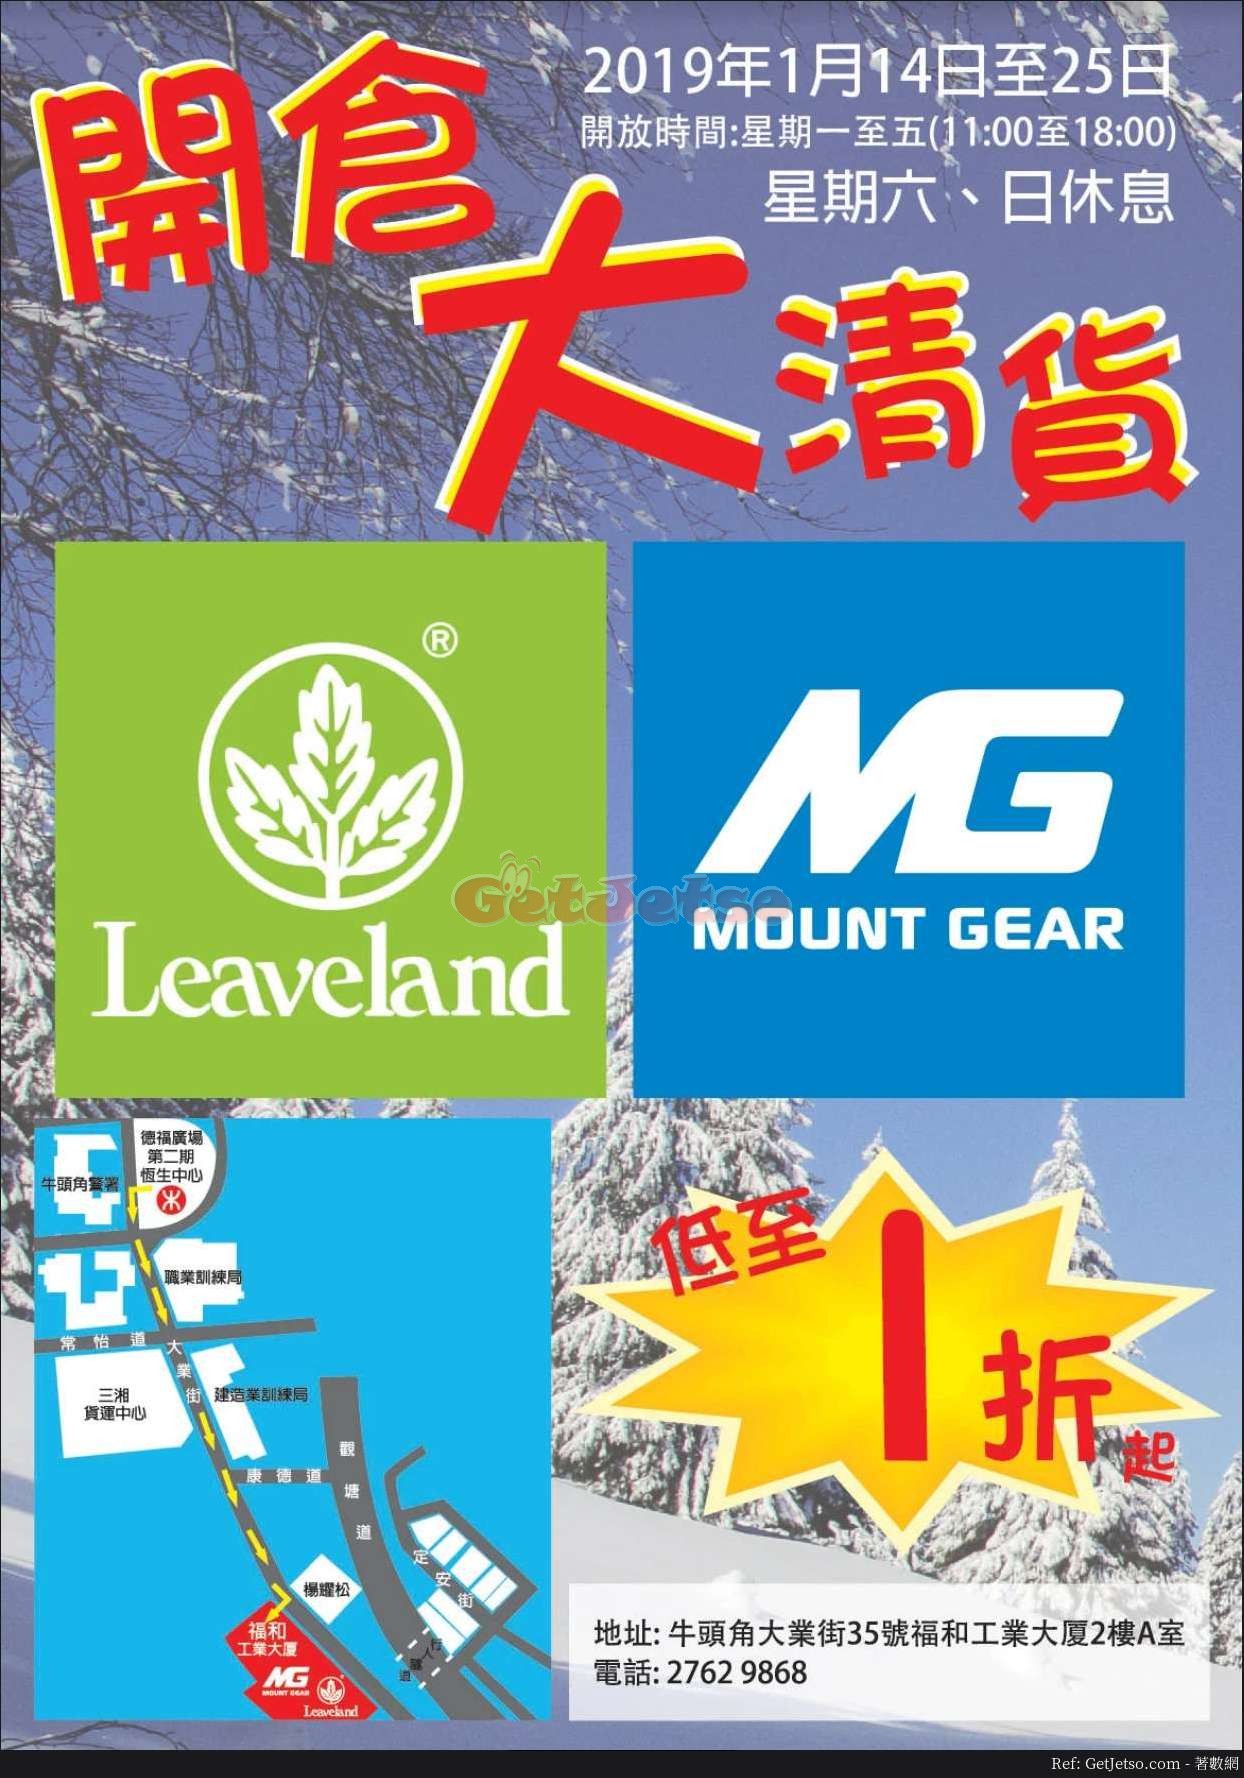 Leaveland、Mount Gear 低至1折開倉優惠(至19年1月27日)圖片1